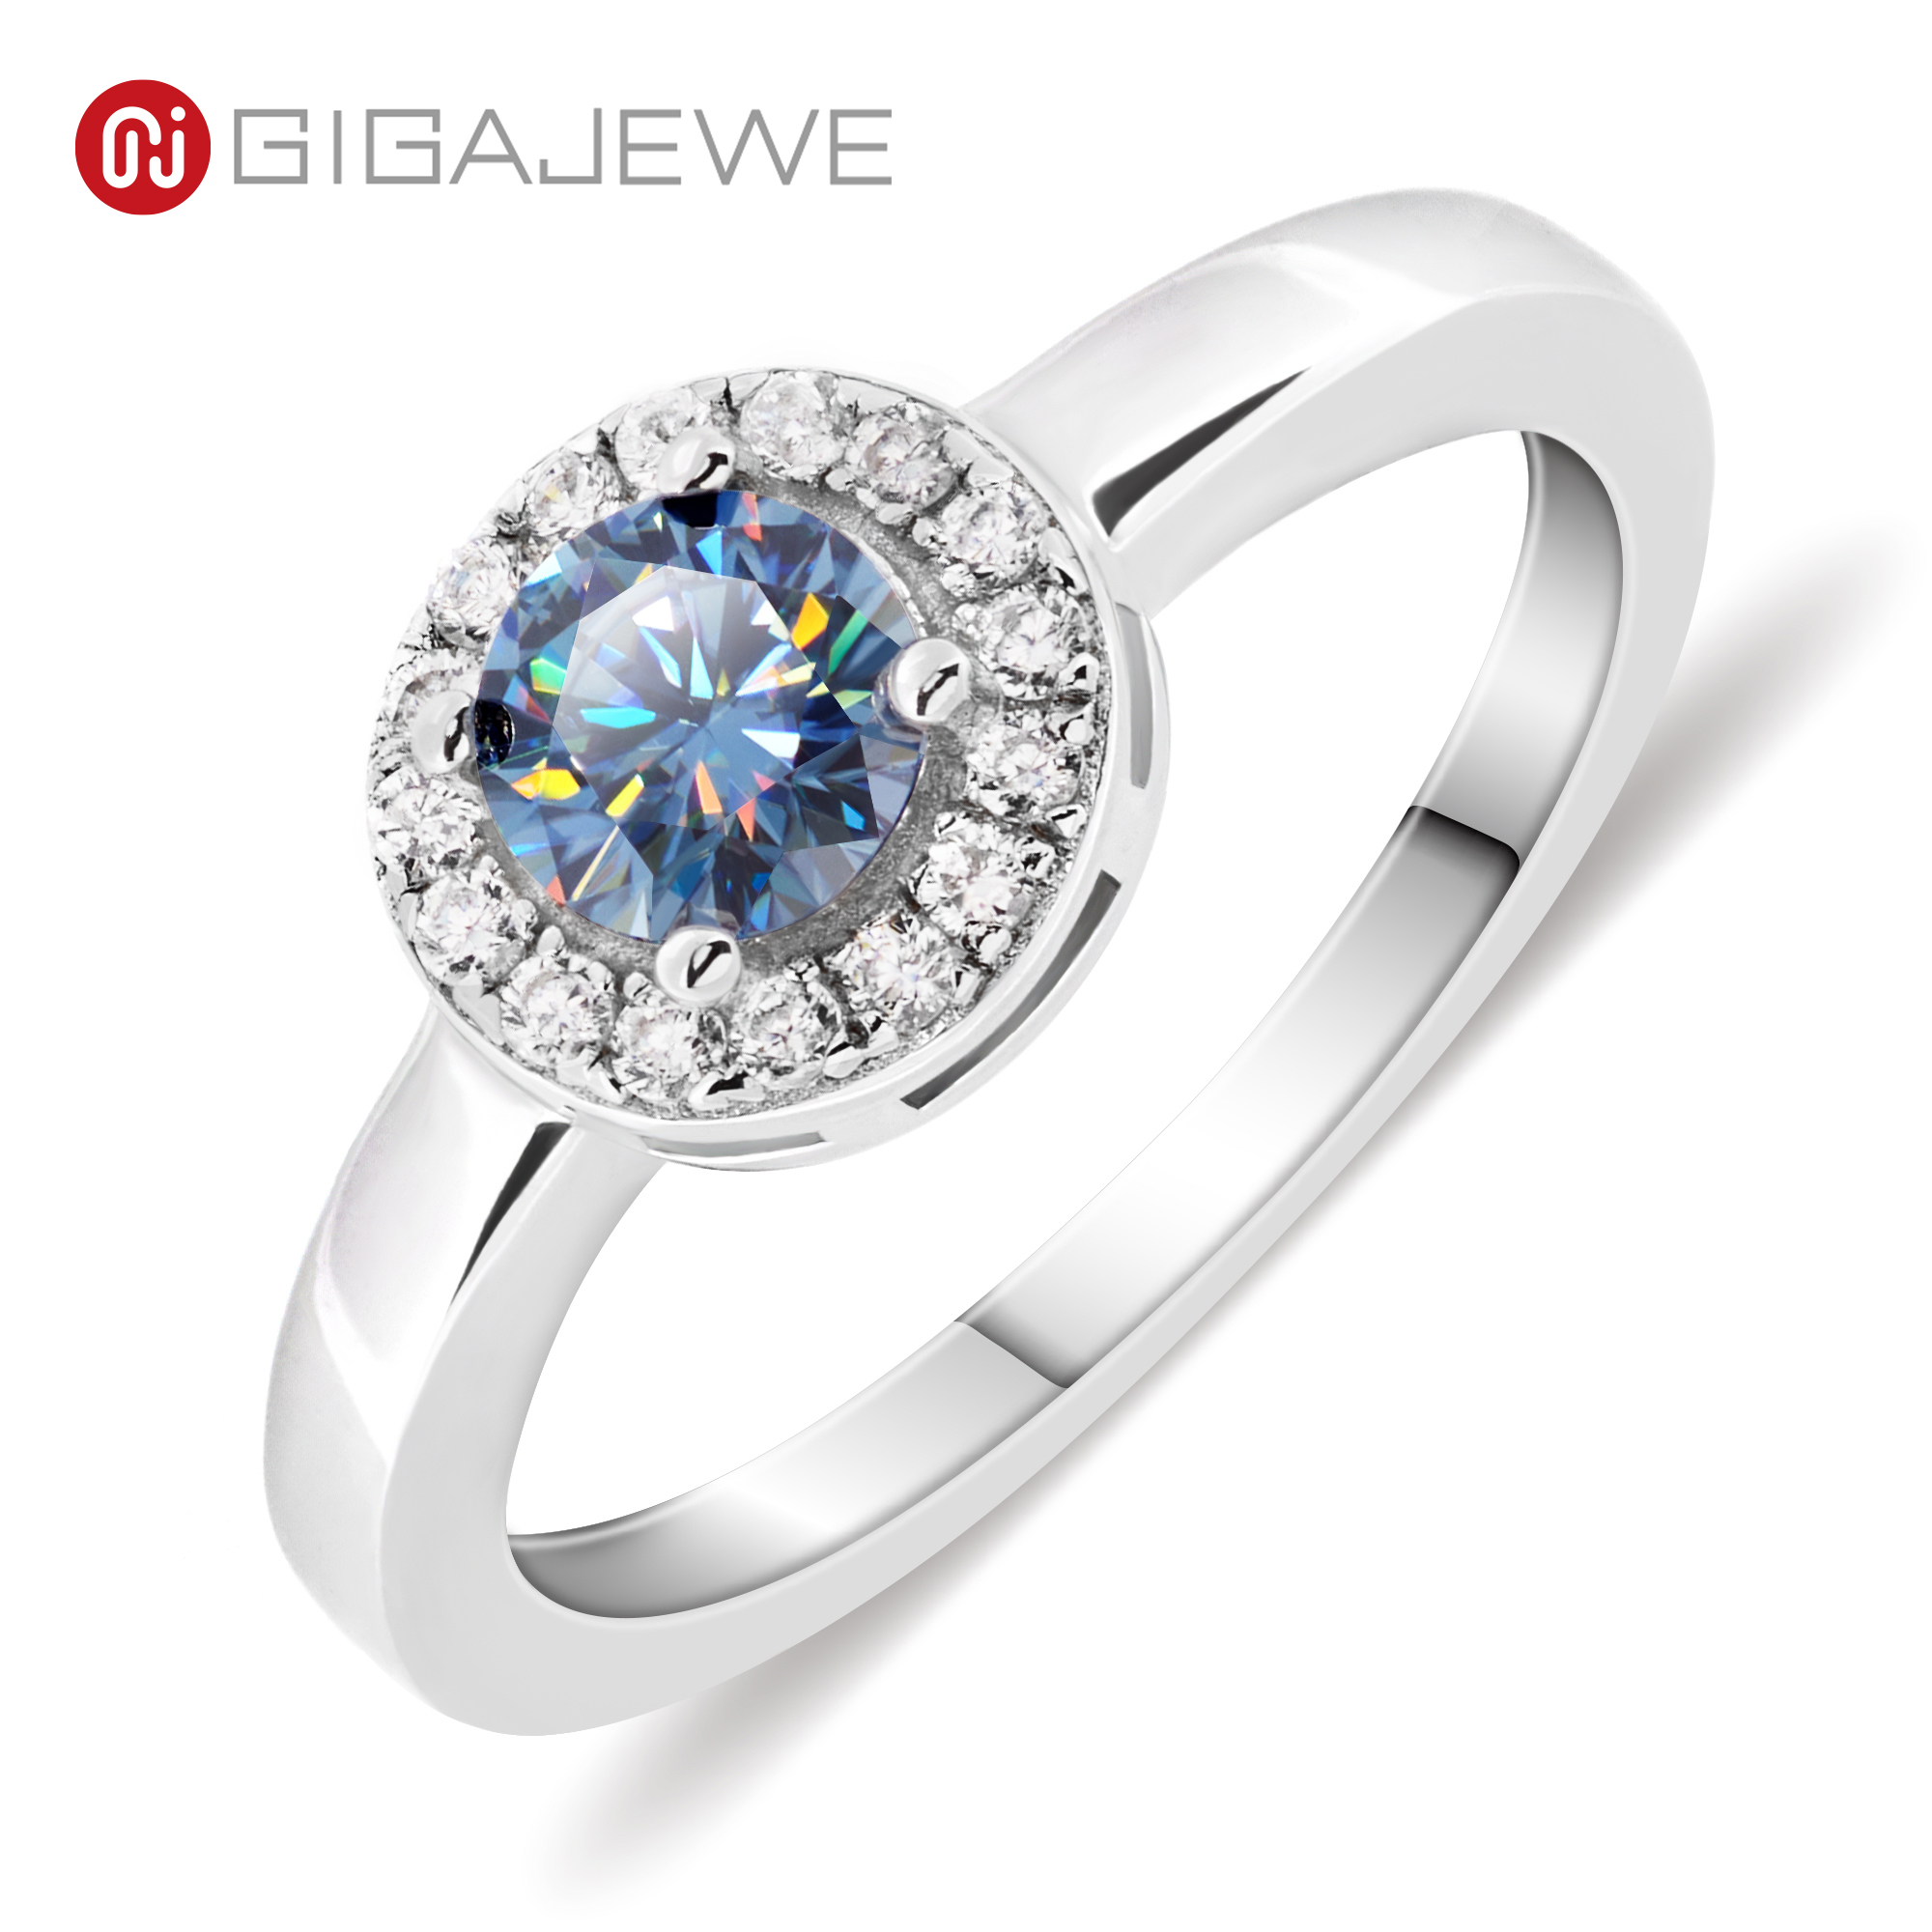 GIGAJEWE 0.5ct 蓝色莫桑钻 VVS1 圆形切割 18K 白金戒指首饰周年纪念女士女朋友礼物